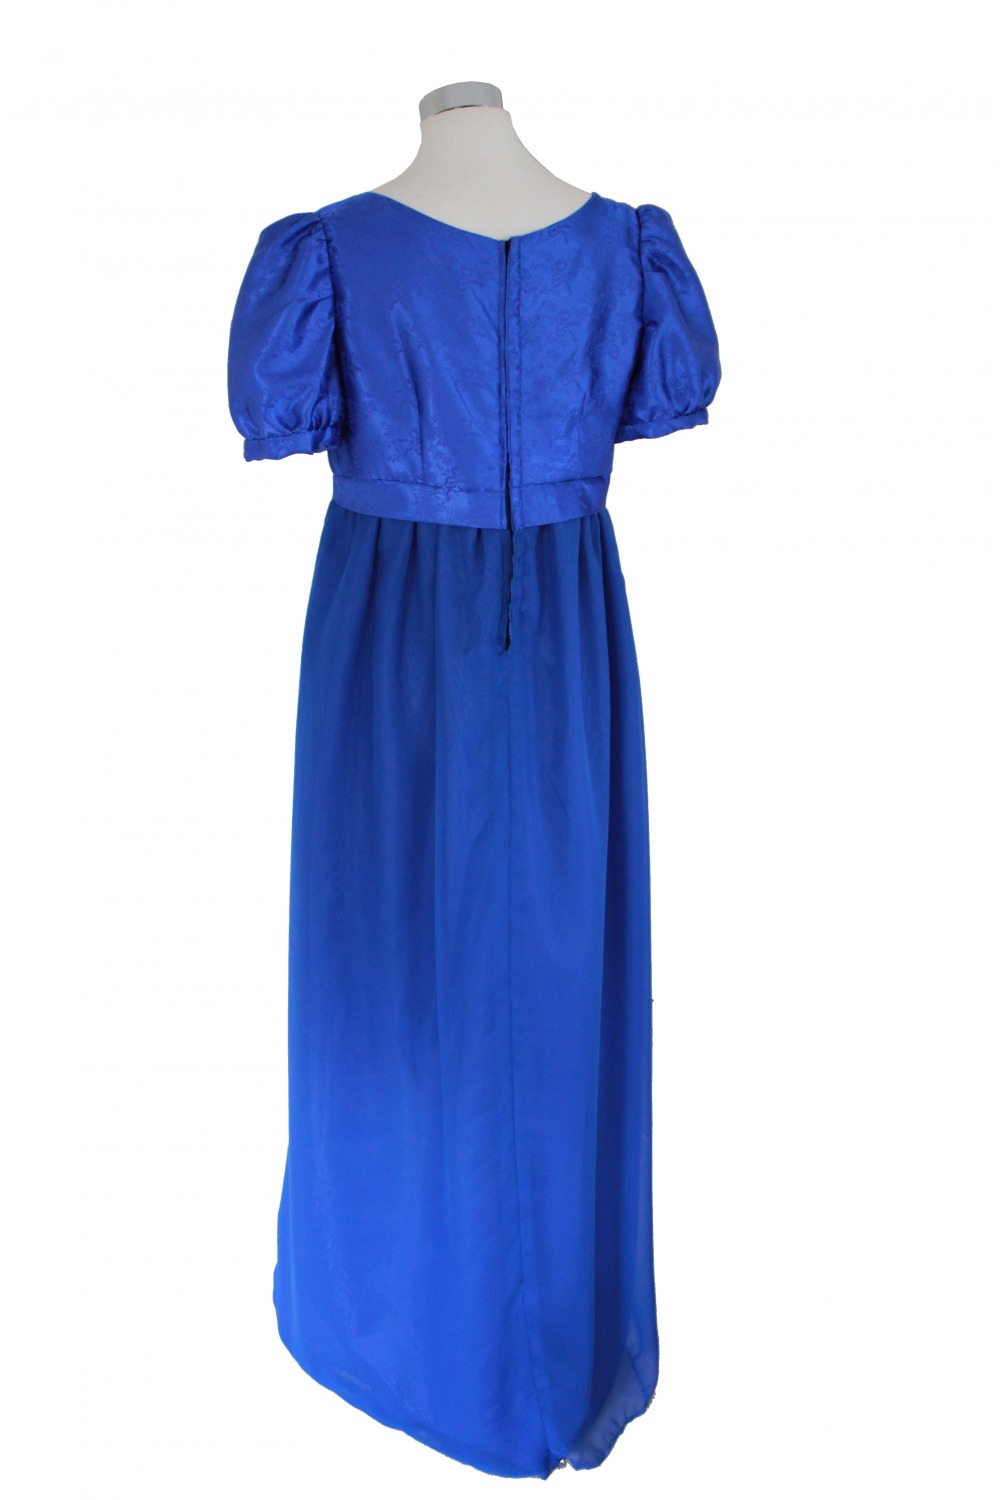 Ladies 19th Century Jane Austen Regency Day Evening Costume Size 10 - 12 Image